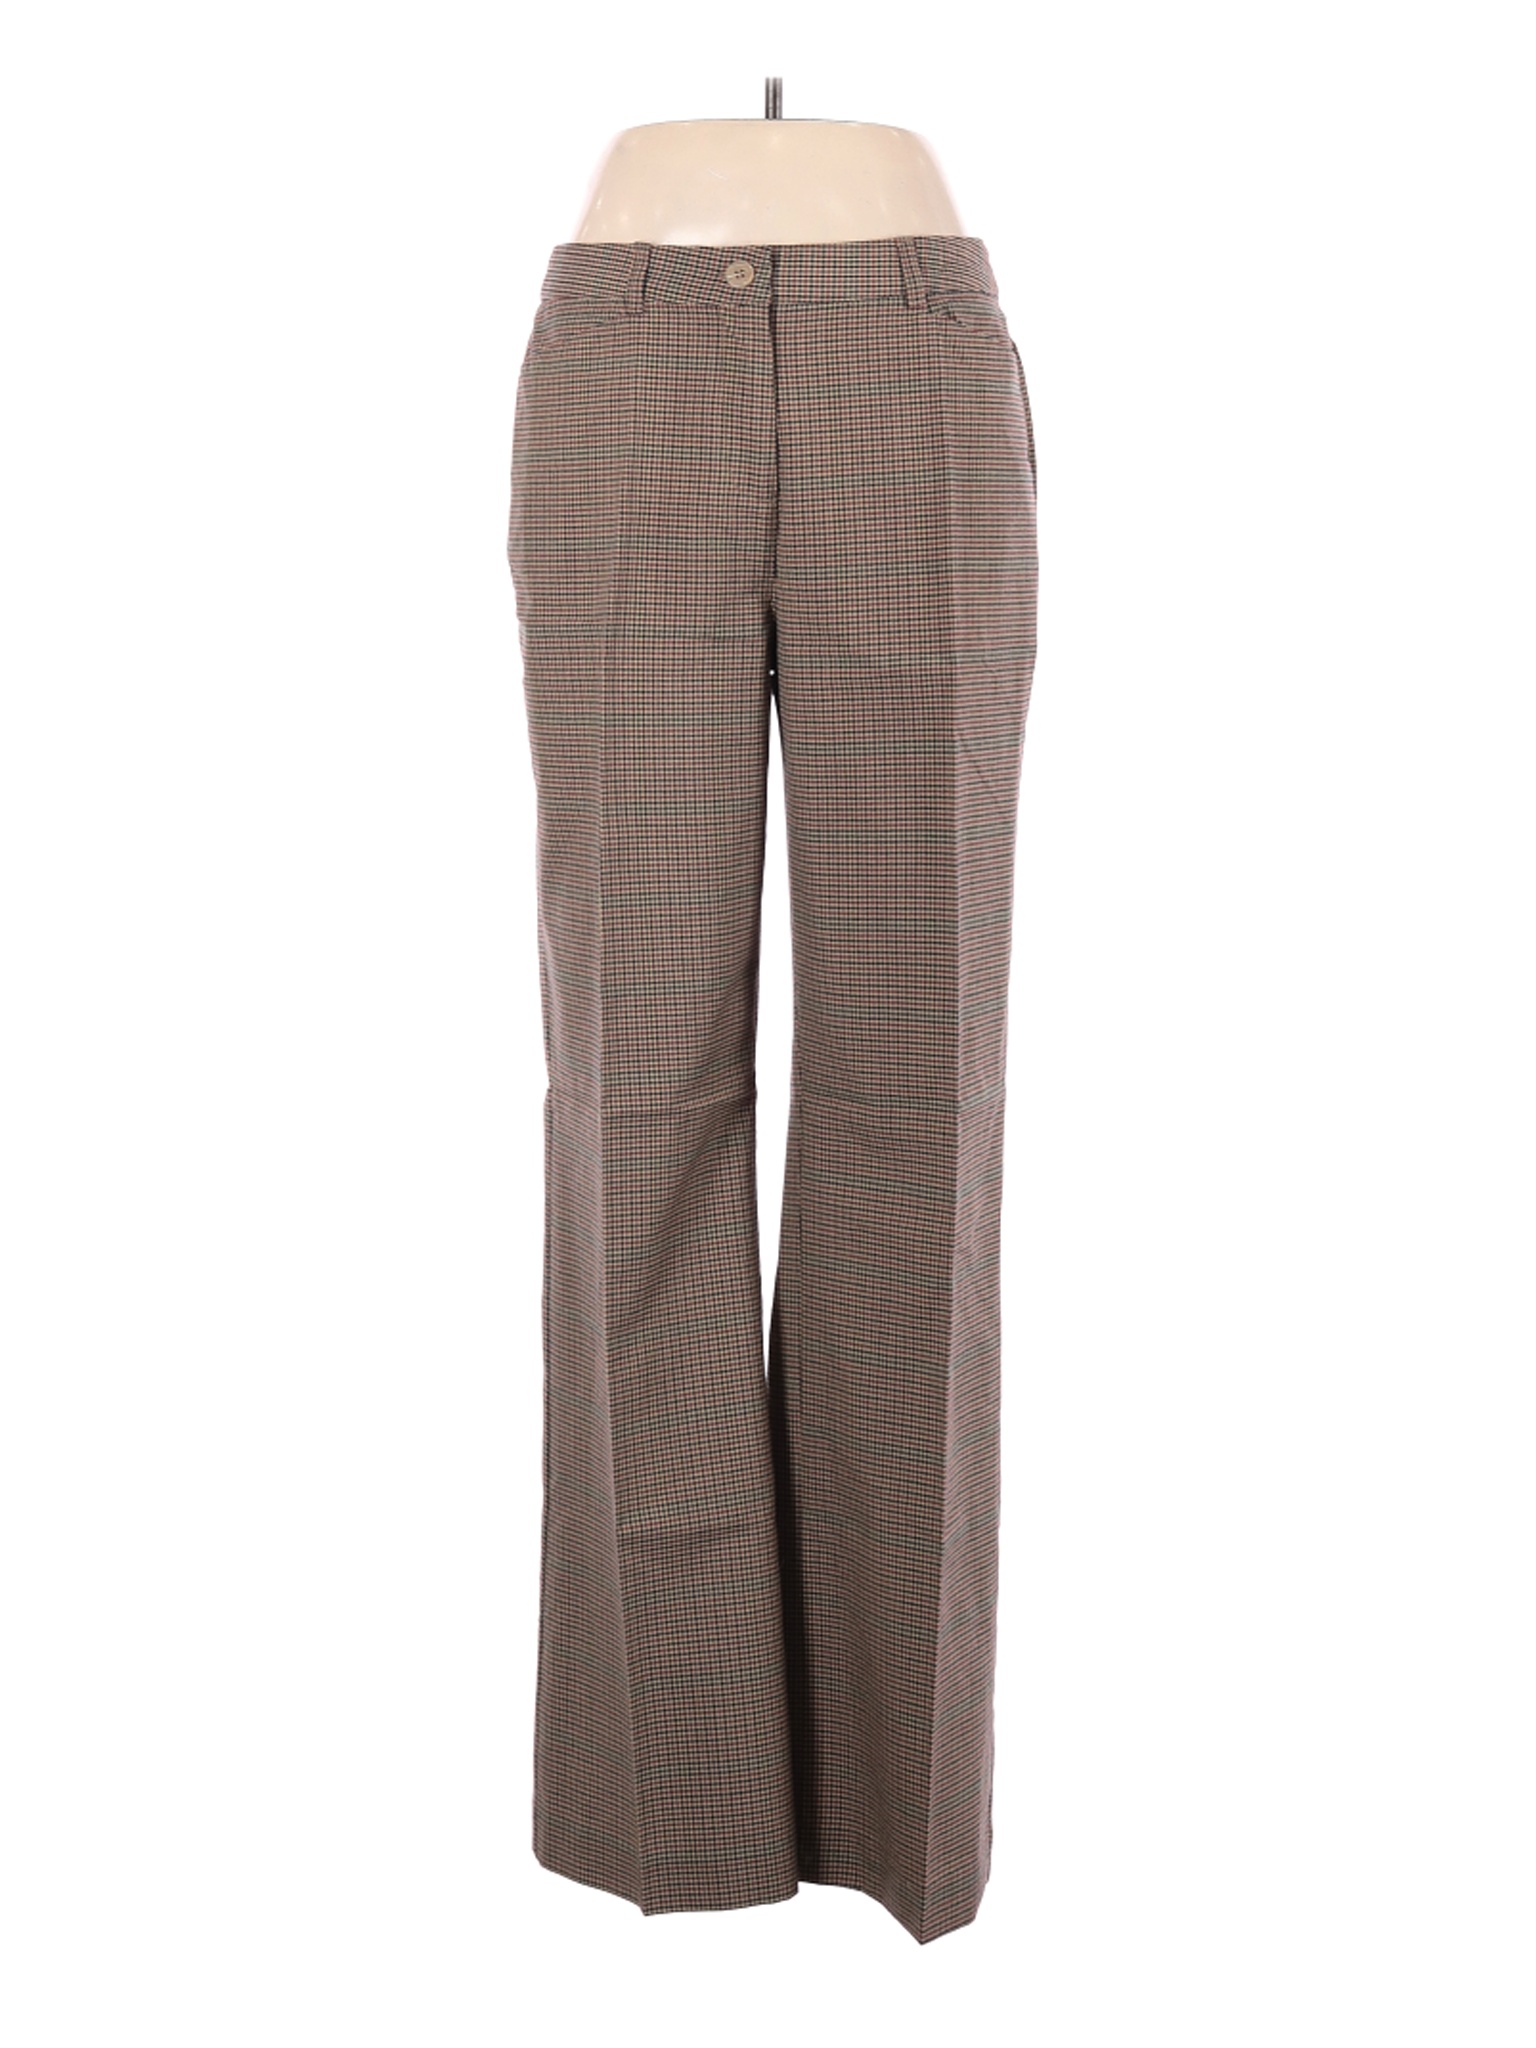 Chadwicks Women Brown Casual Pants 12 | eBay